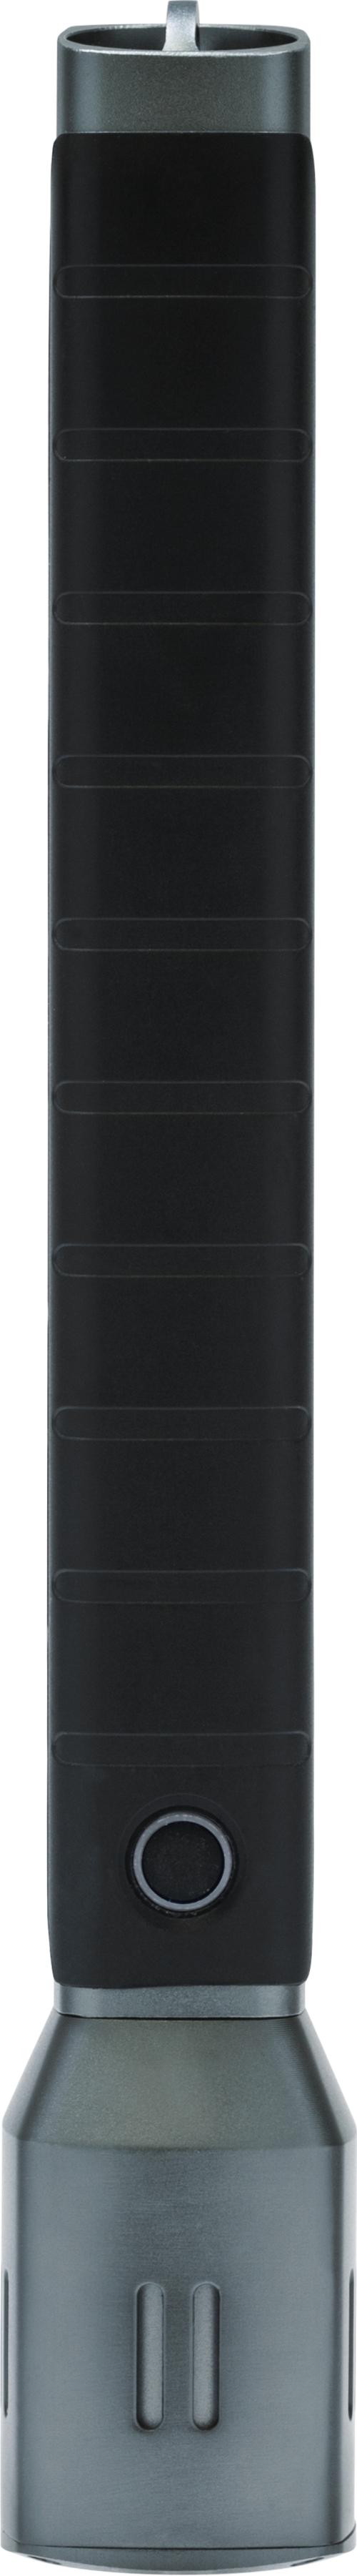 Flashlight TL-530, 30.6 cm